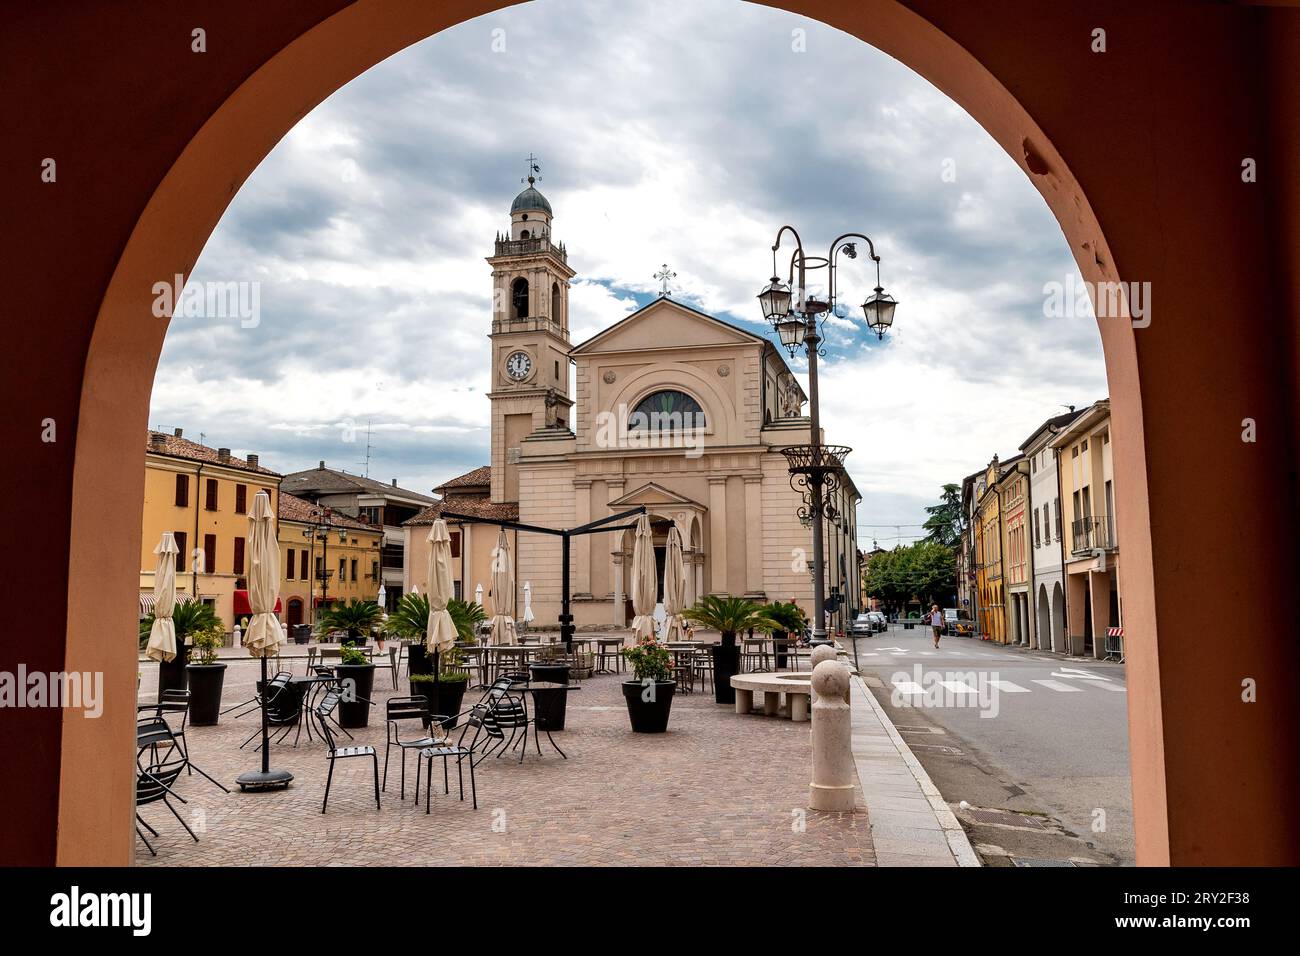 Old church of Brescello in Italy Stock Photo